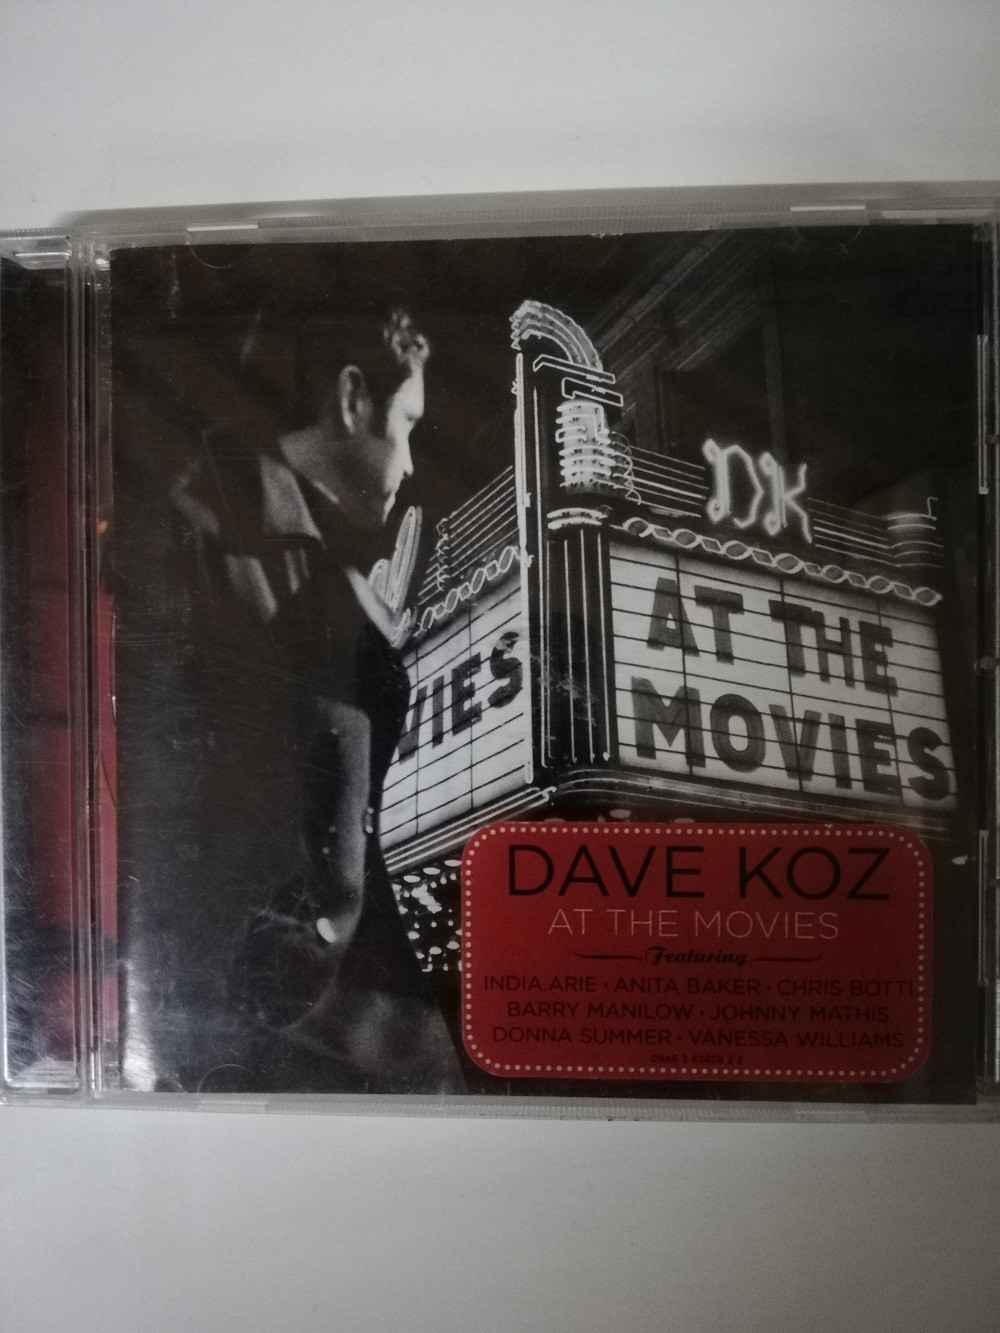 Imagen CD DAVE KOZ - AT THE MOVIES